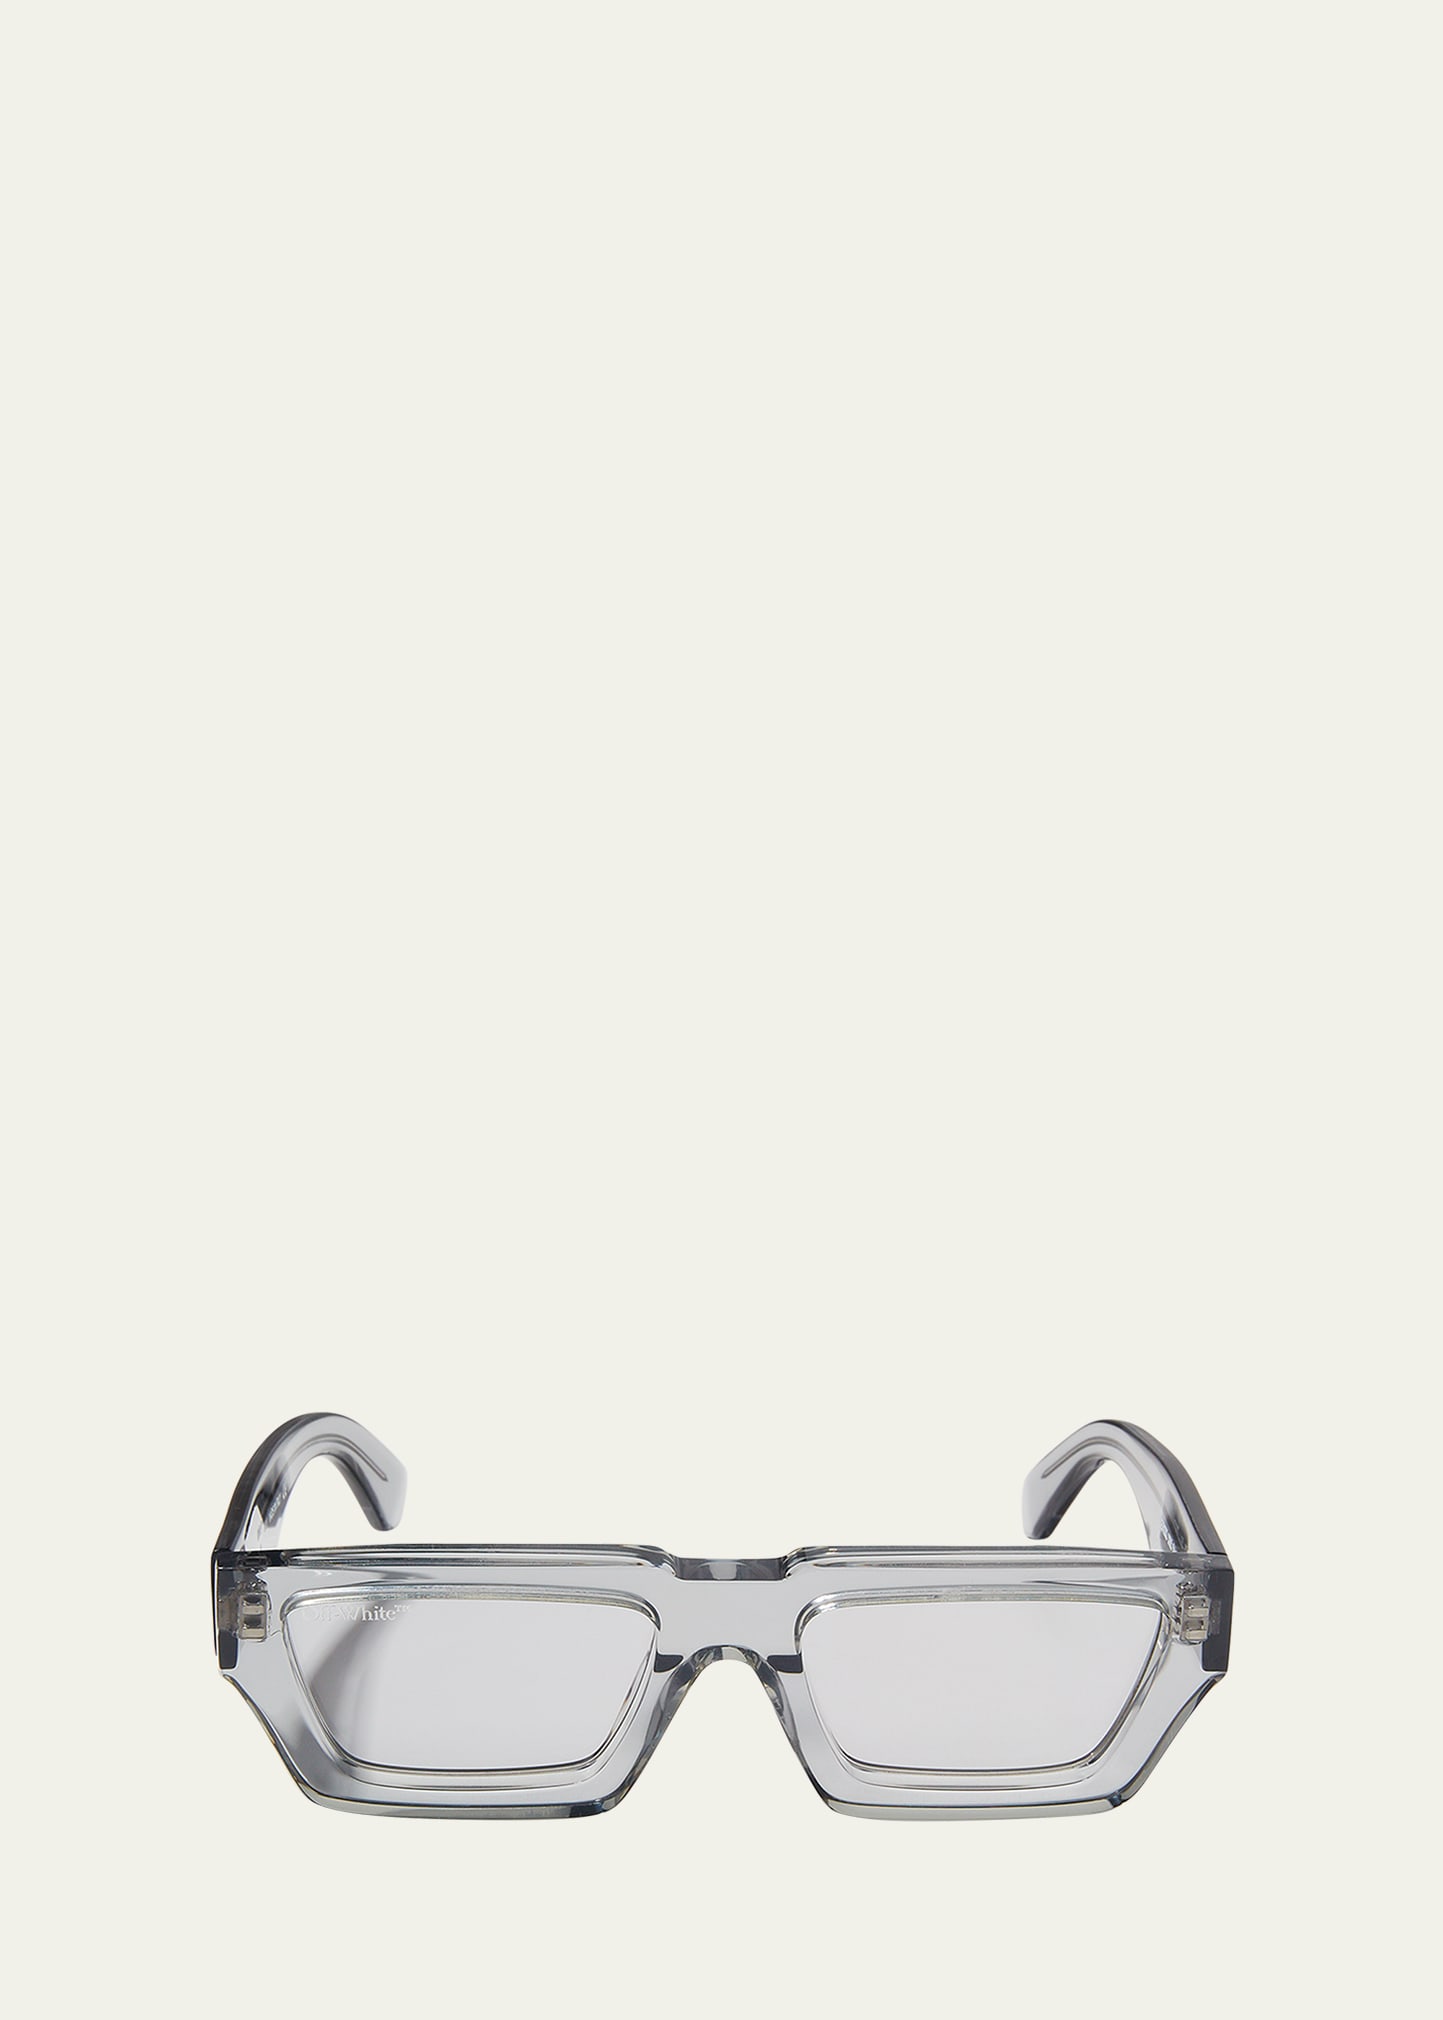 Louis Vuitton Men's Sunglasses for sale in Manchester, United